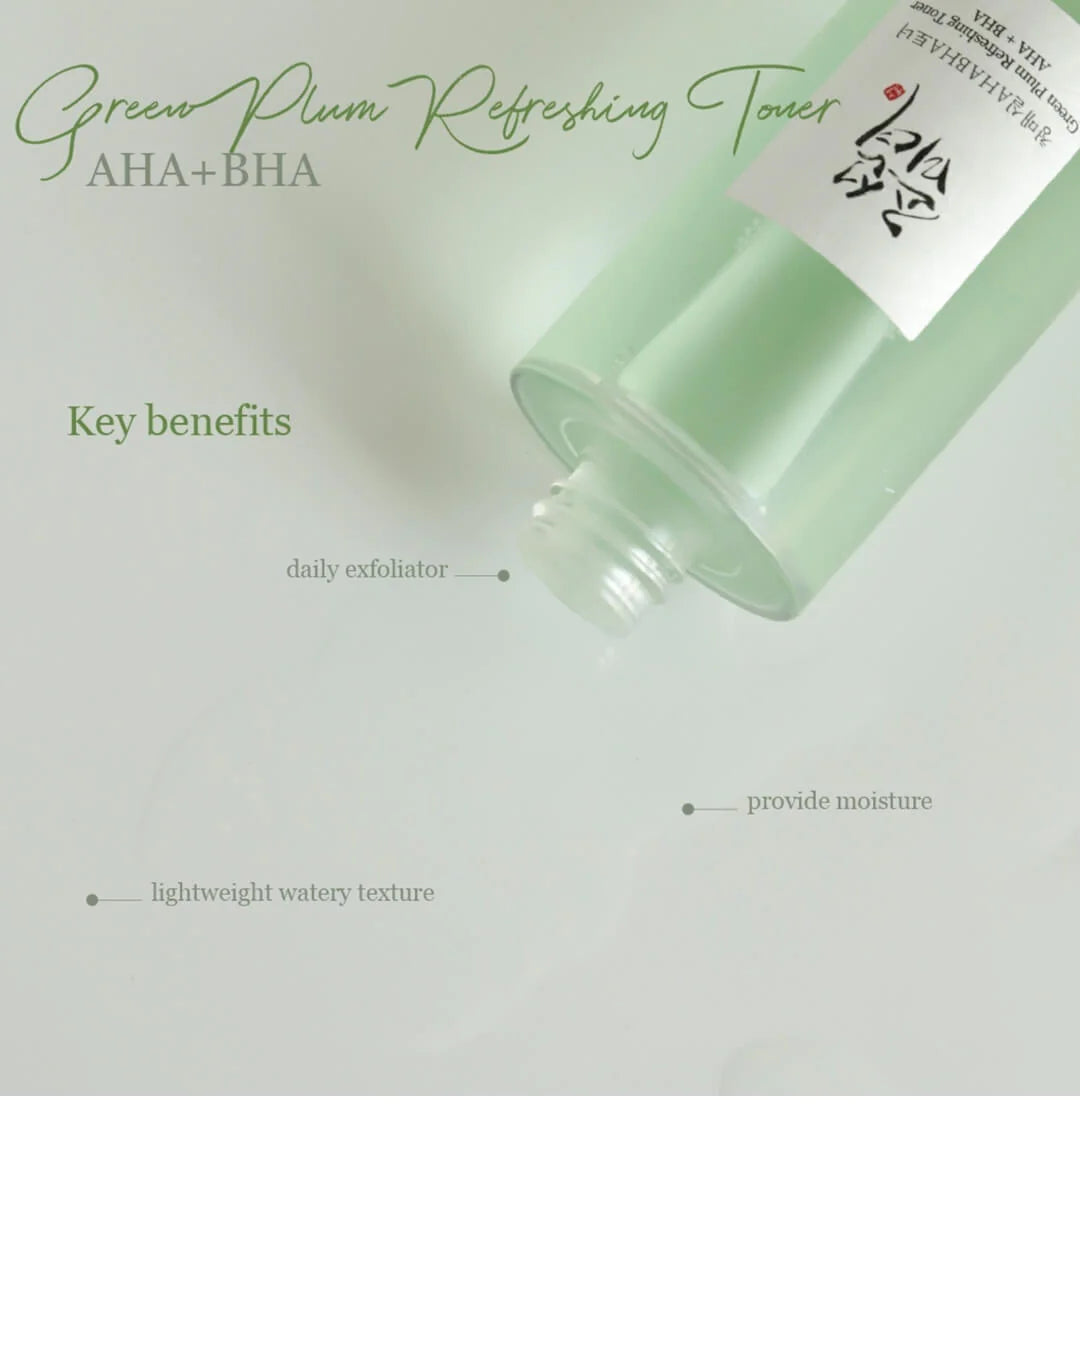 AHA BHA Green Plum Refreshing Toner for sensitive skin